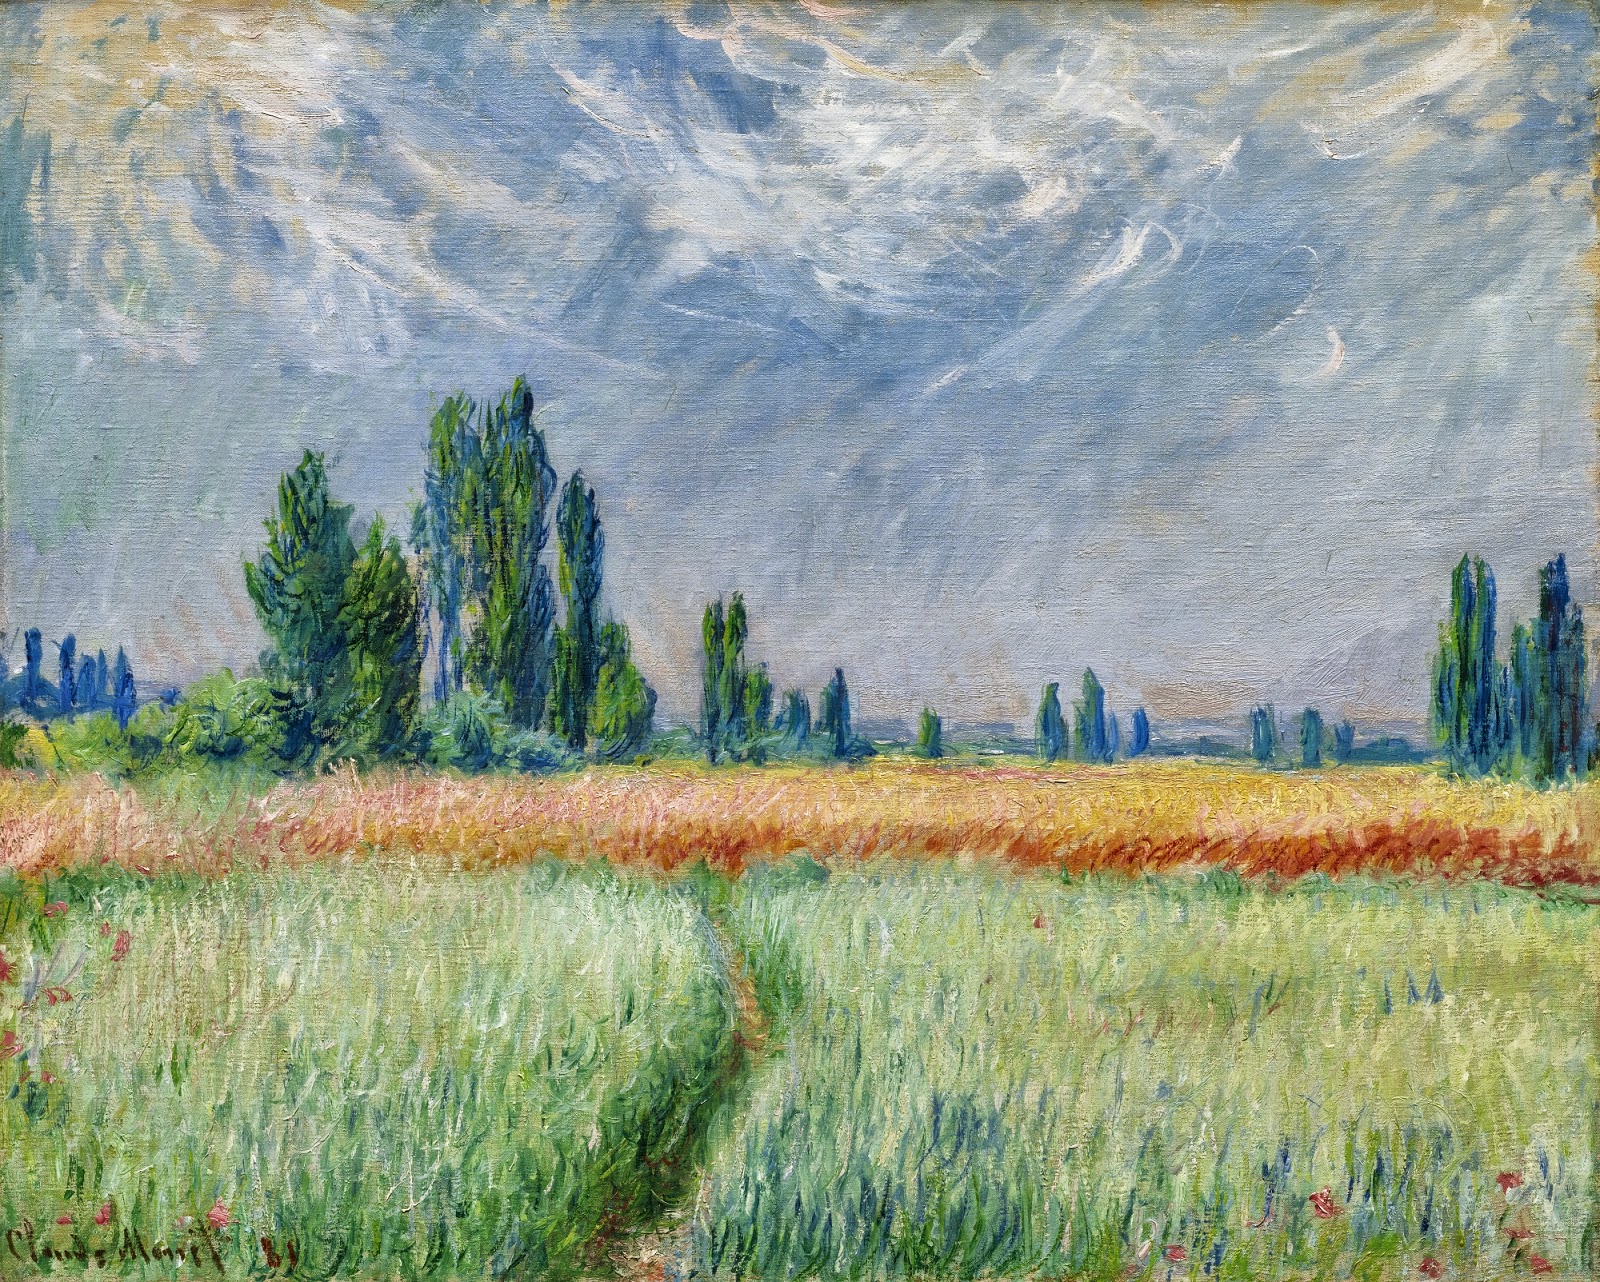 Claude+Monet-1840-1926 (512).jpg